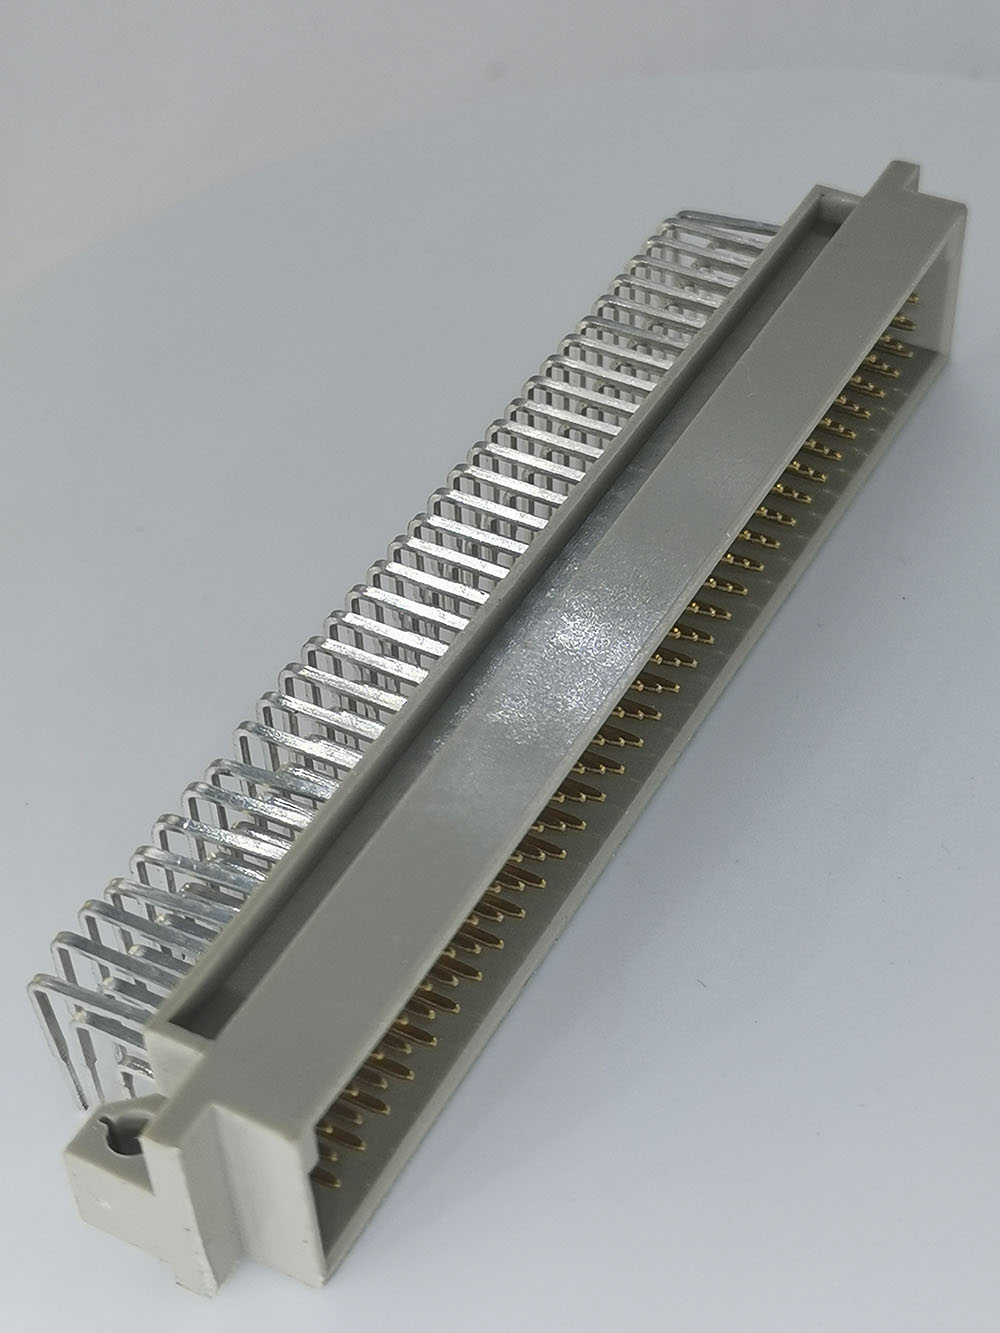 128 PIN Tipo C Male IEC 60603-2 Conectores